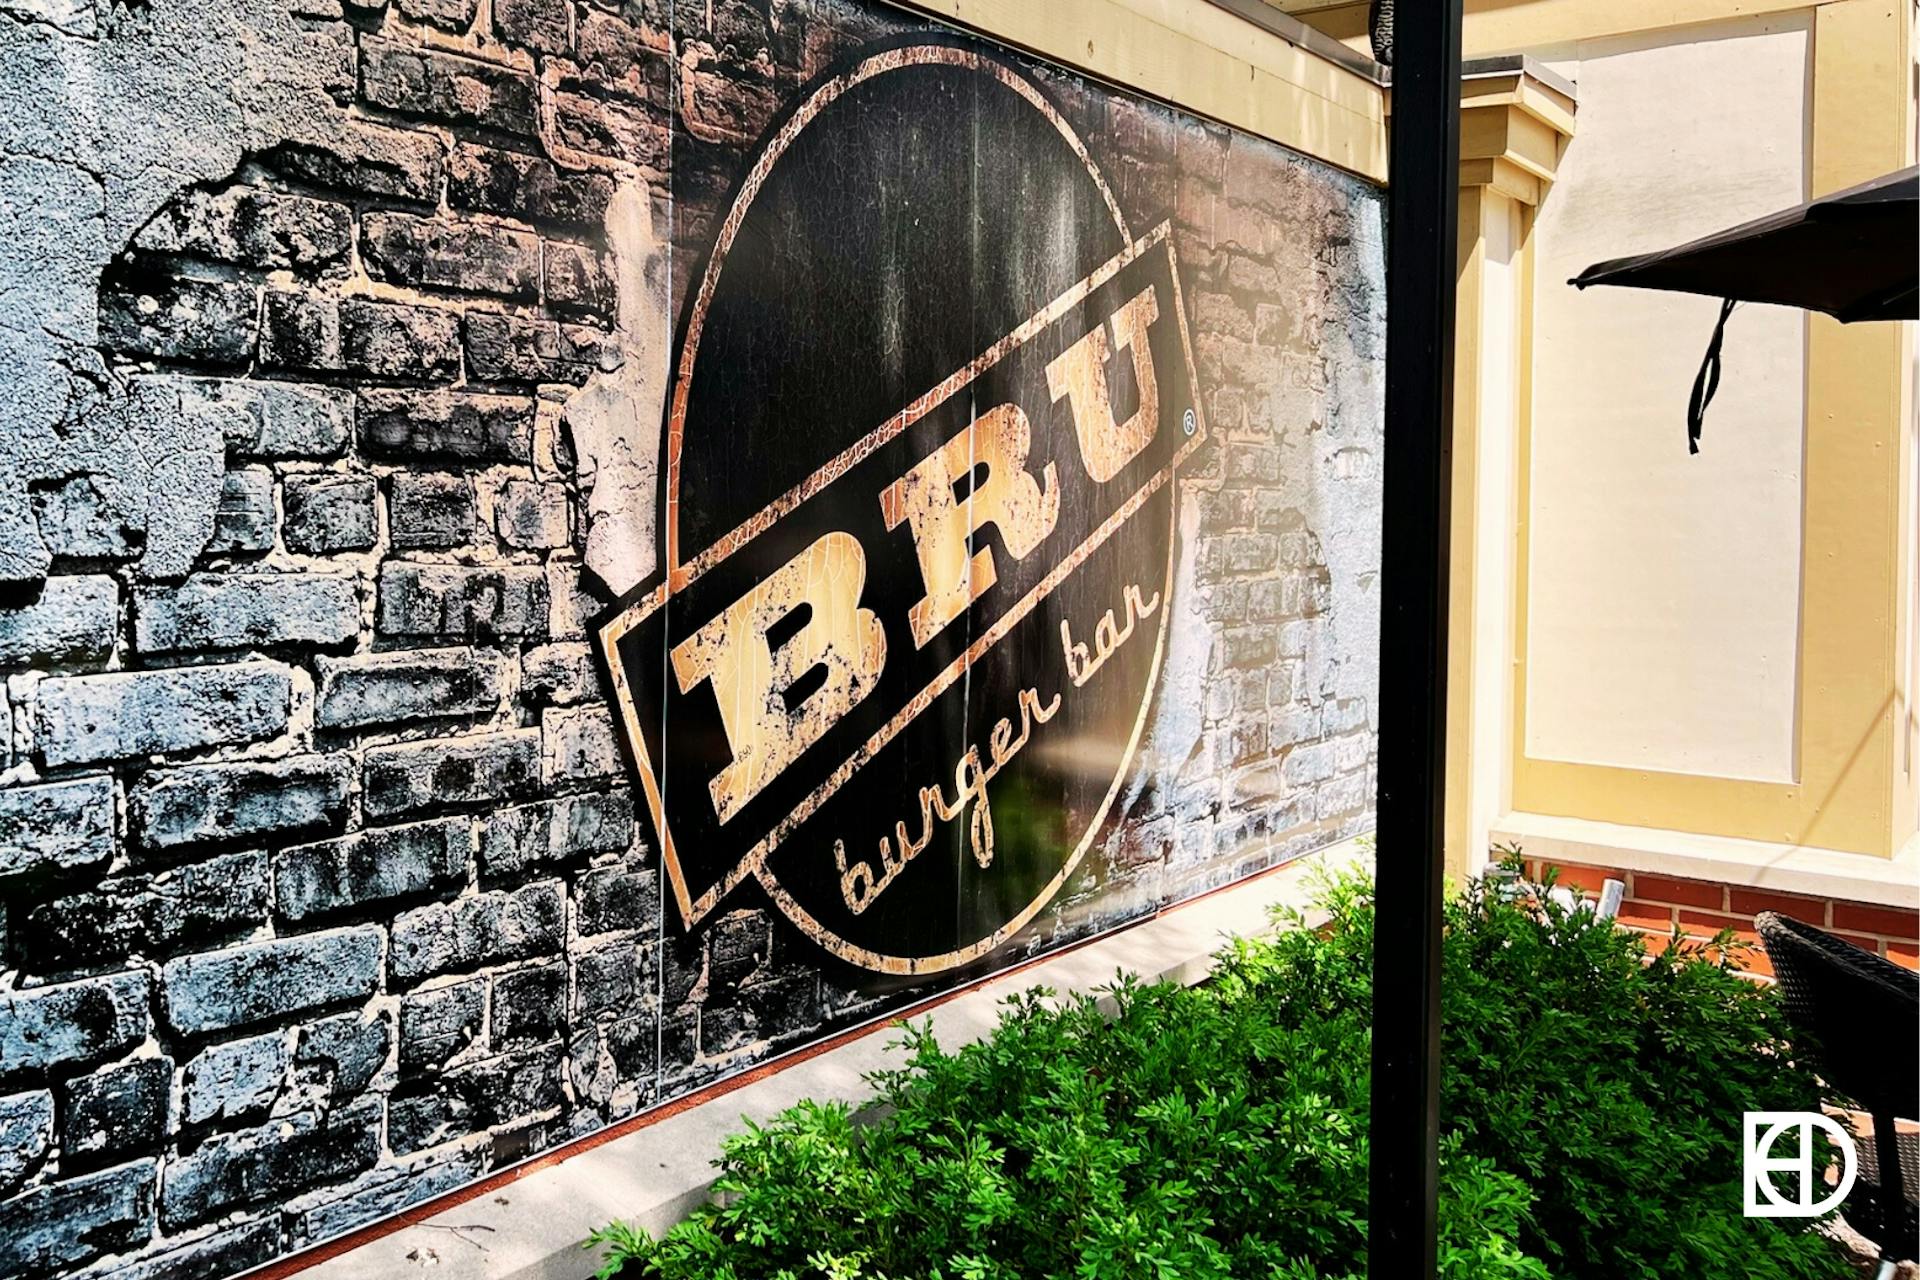 Exterior photo of Bru Burger, showing signage